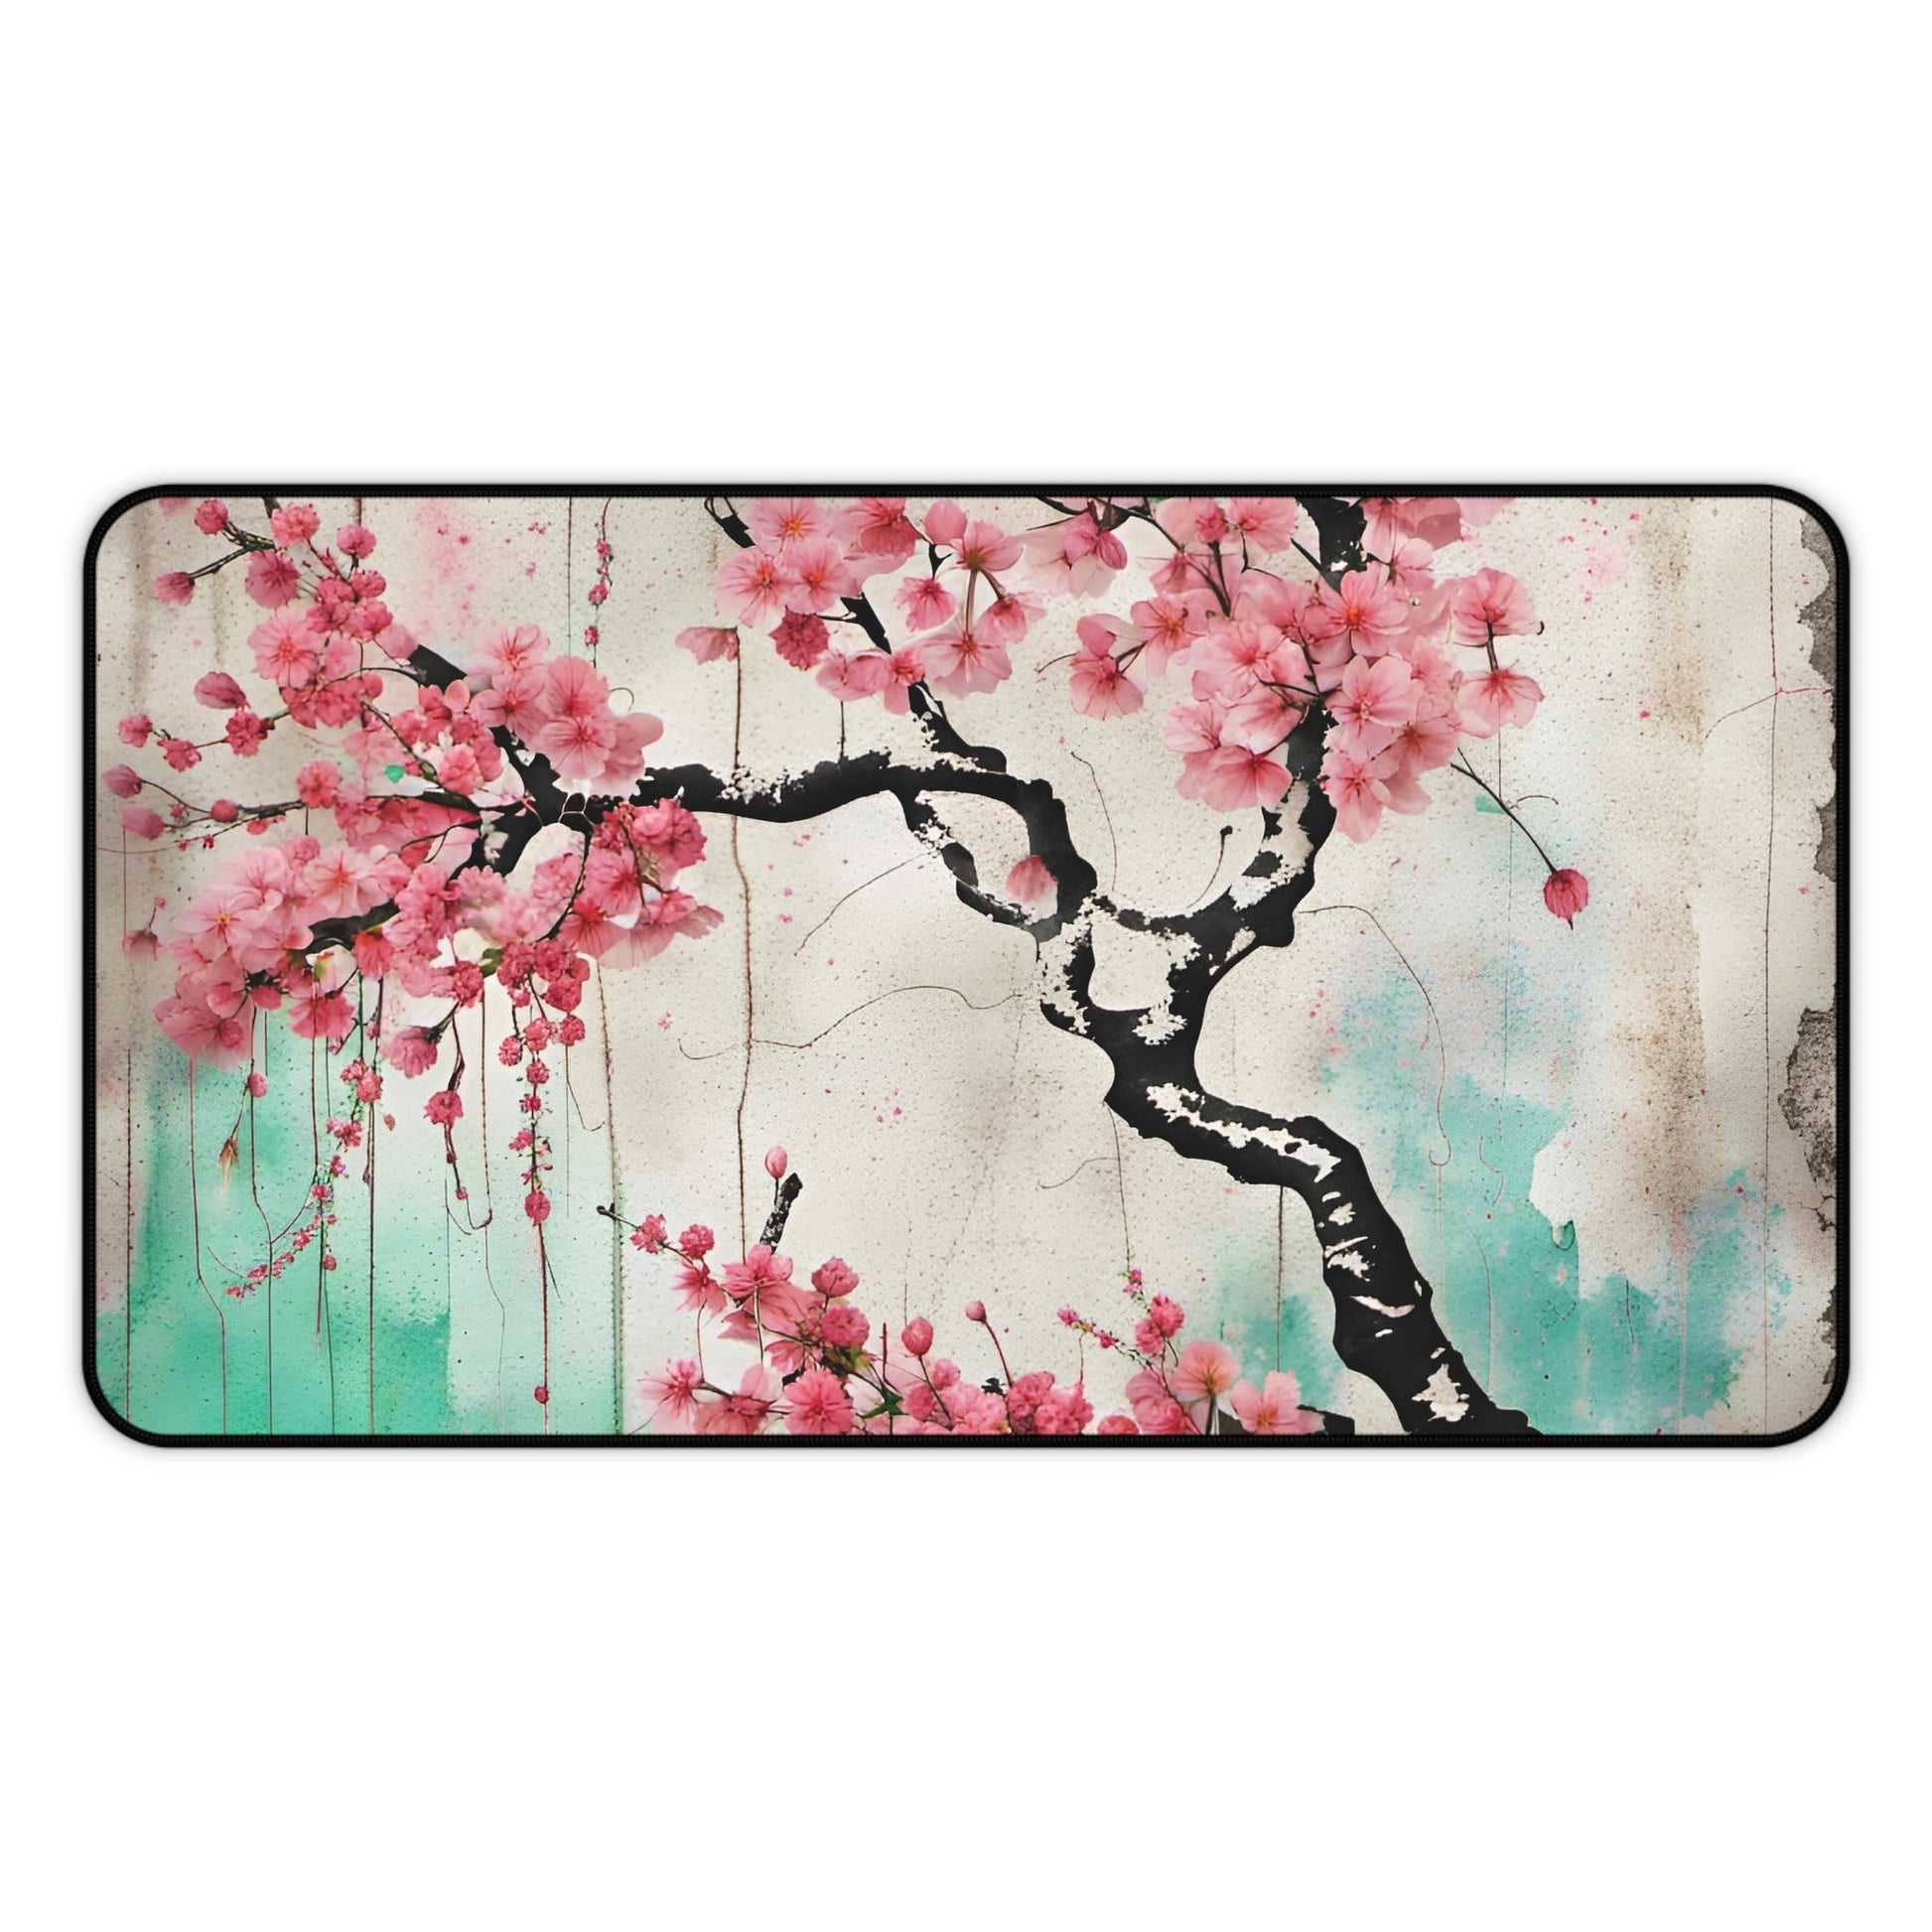 Cherry Blossoms Street Art Style Printed on Desk Mat 12x22 